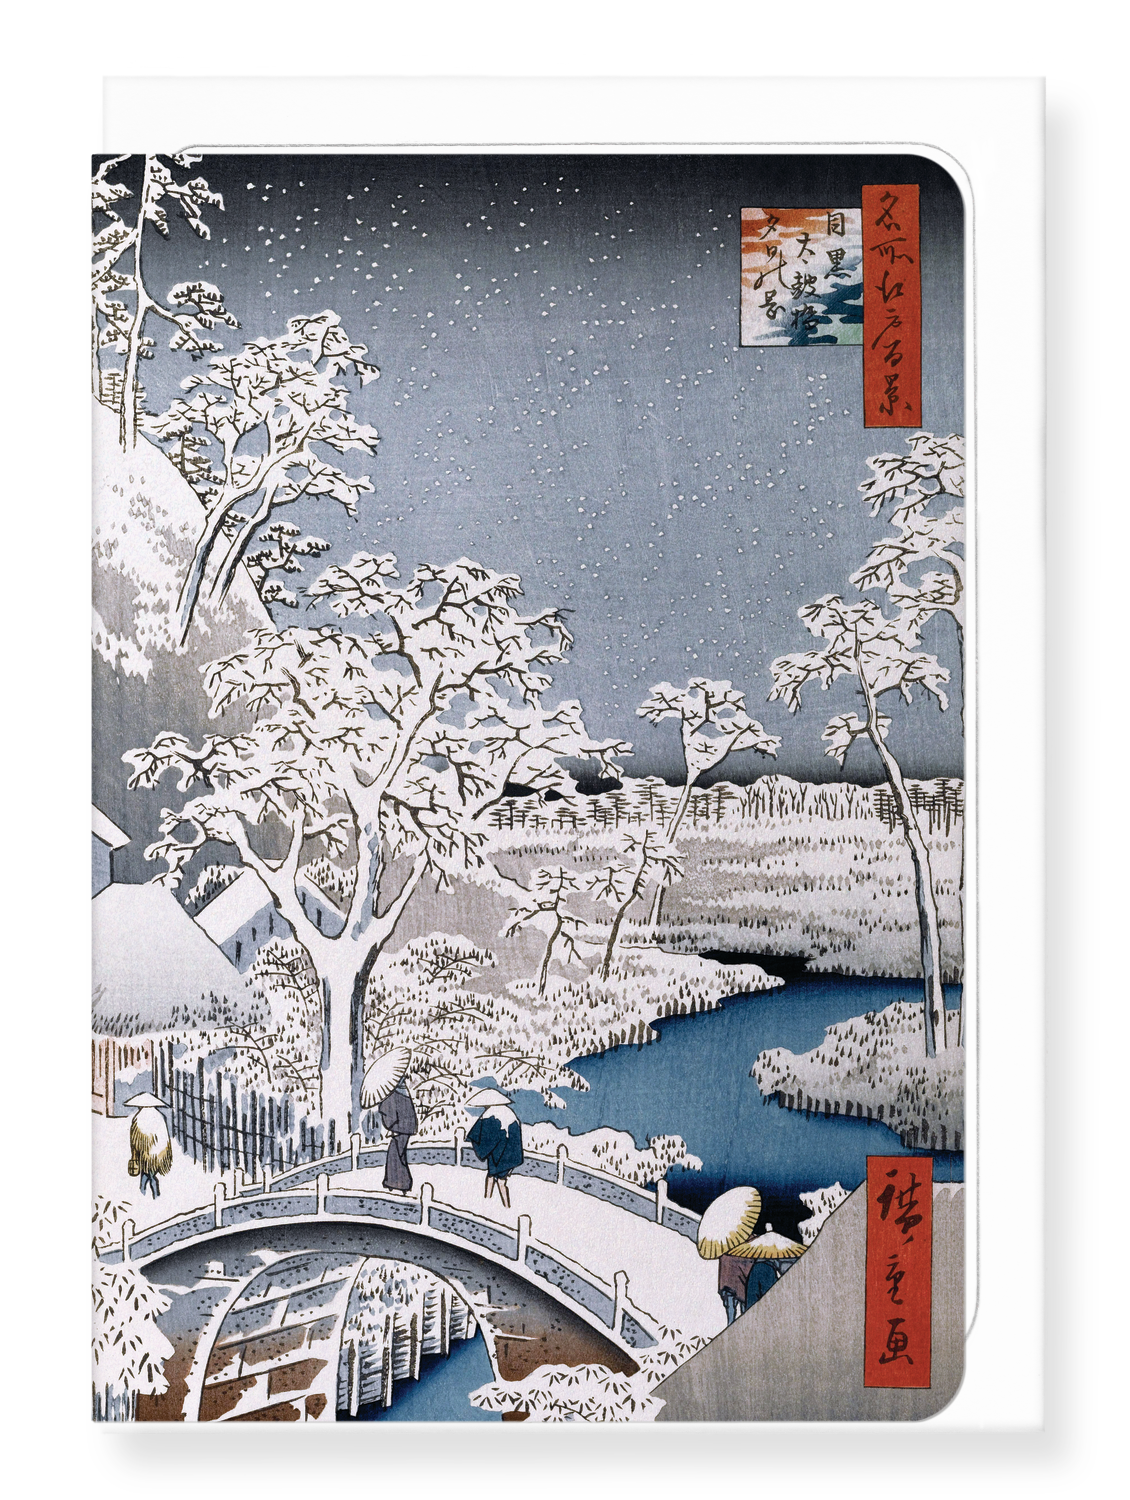 Ezen Designs - Meguro Drum Bridge and Sunset Hill (1857) - Greeting Card - Front